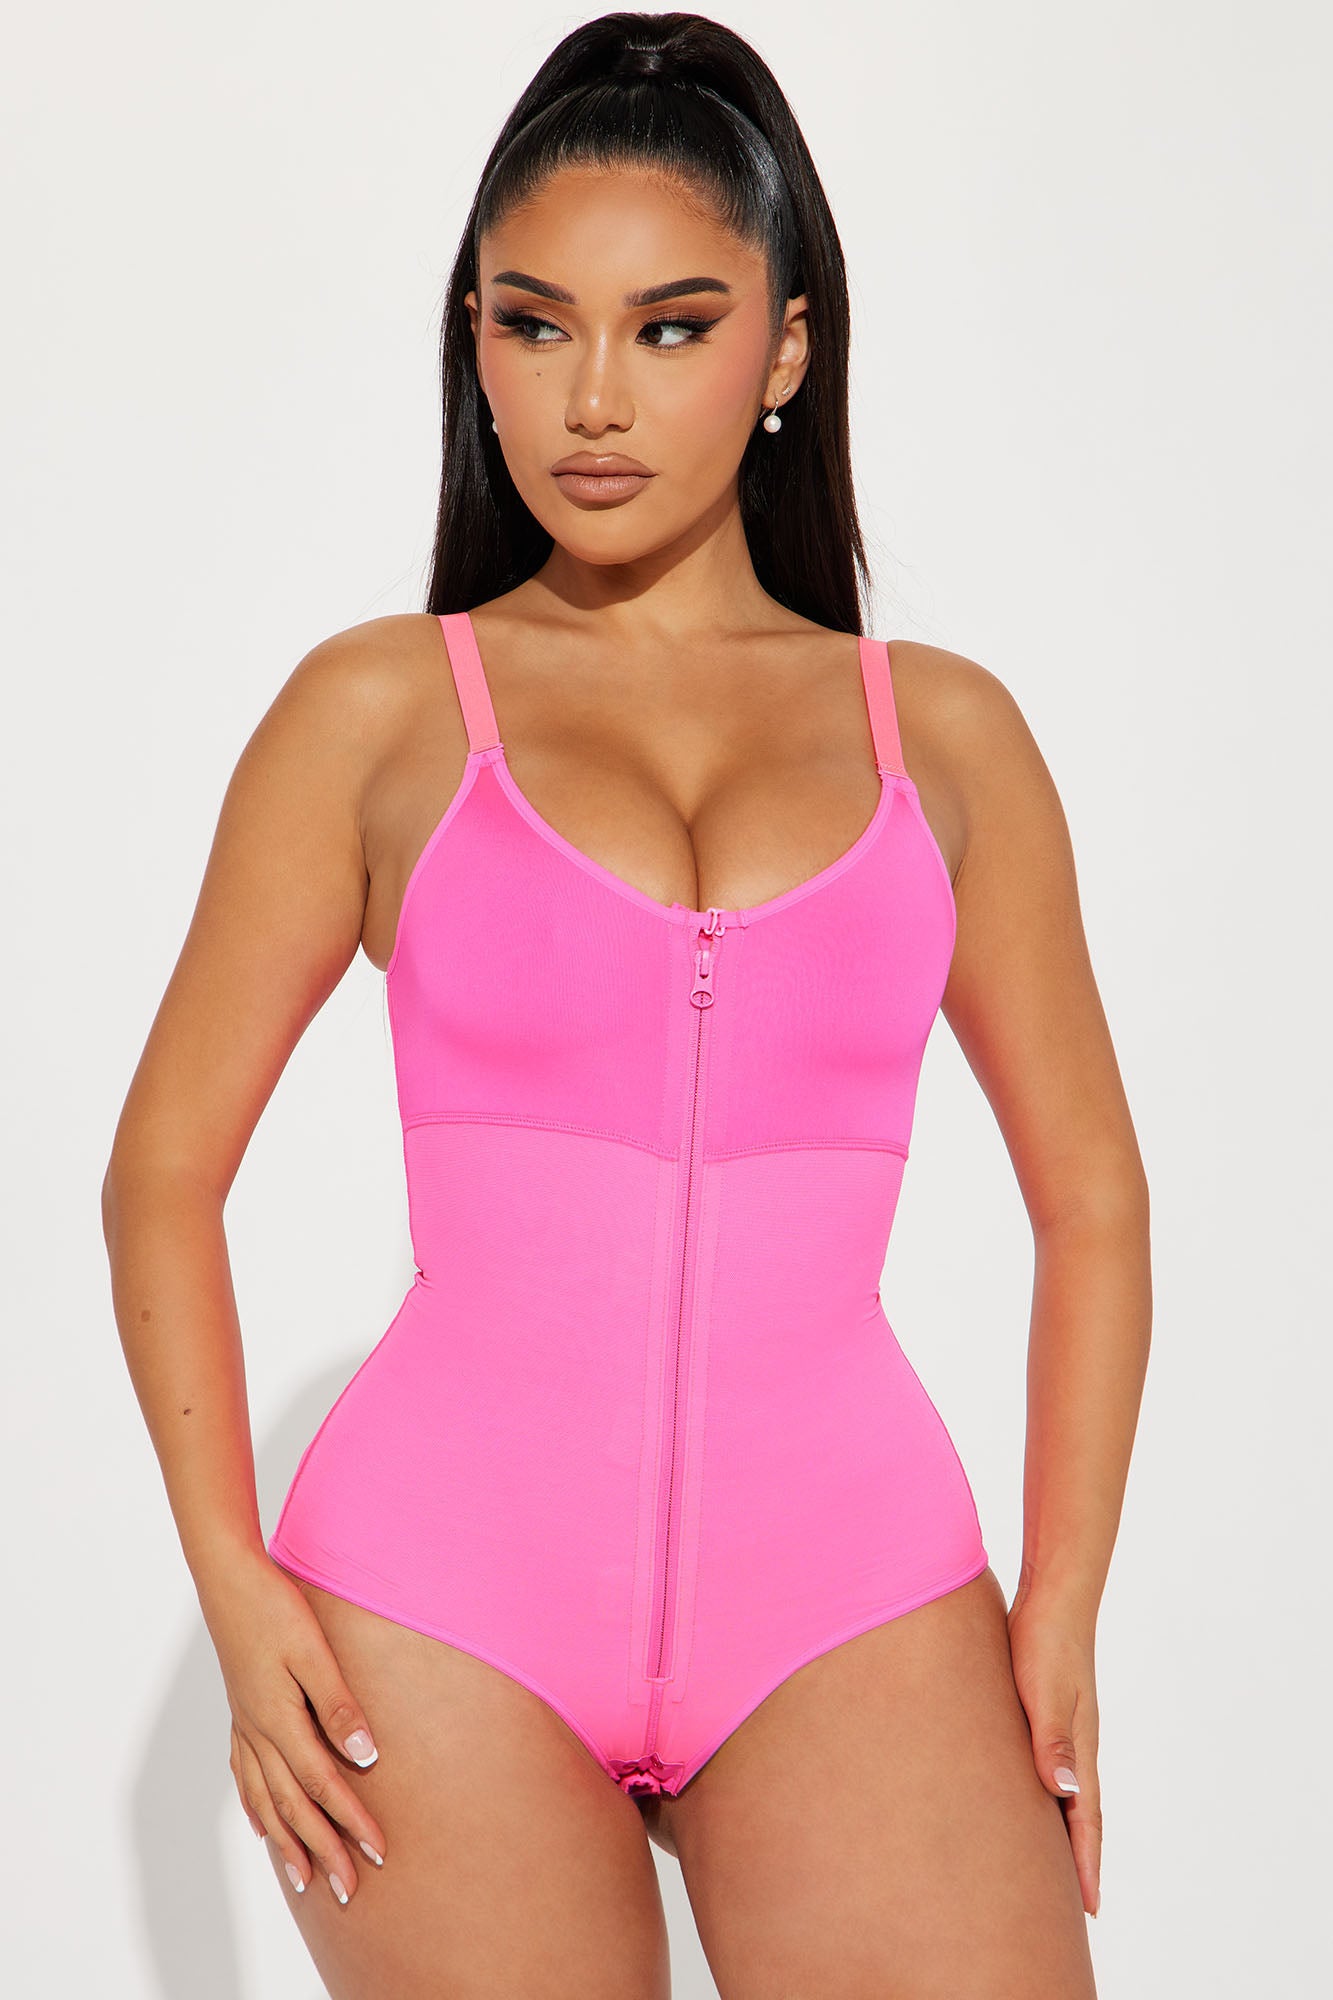 1280 Invisible Shaper Bodysuit TrueShapers – The Pink Room Shapewear